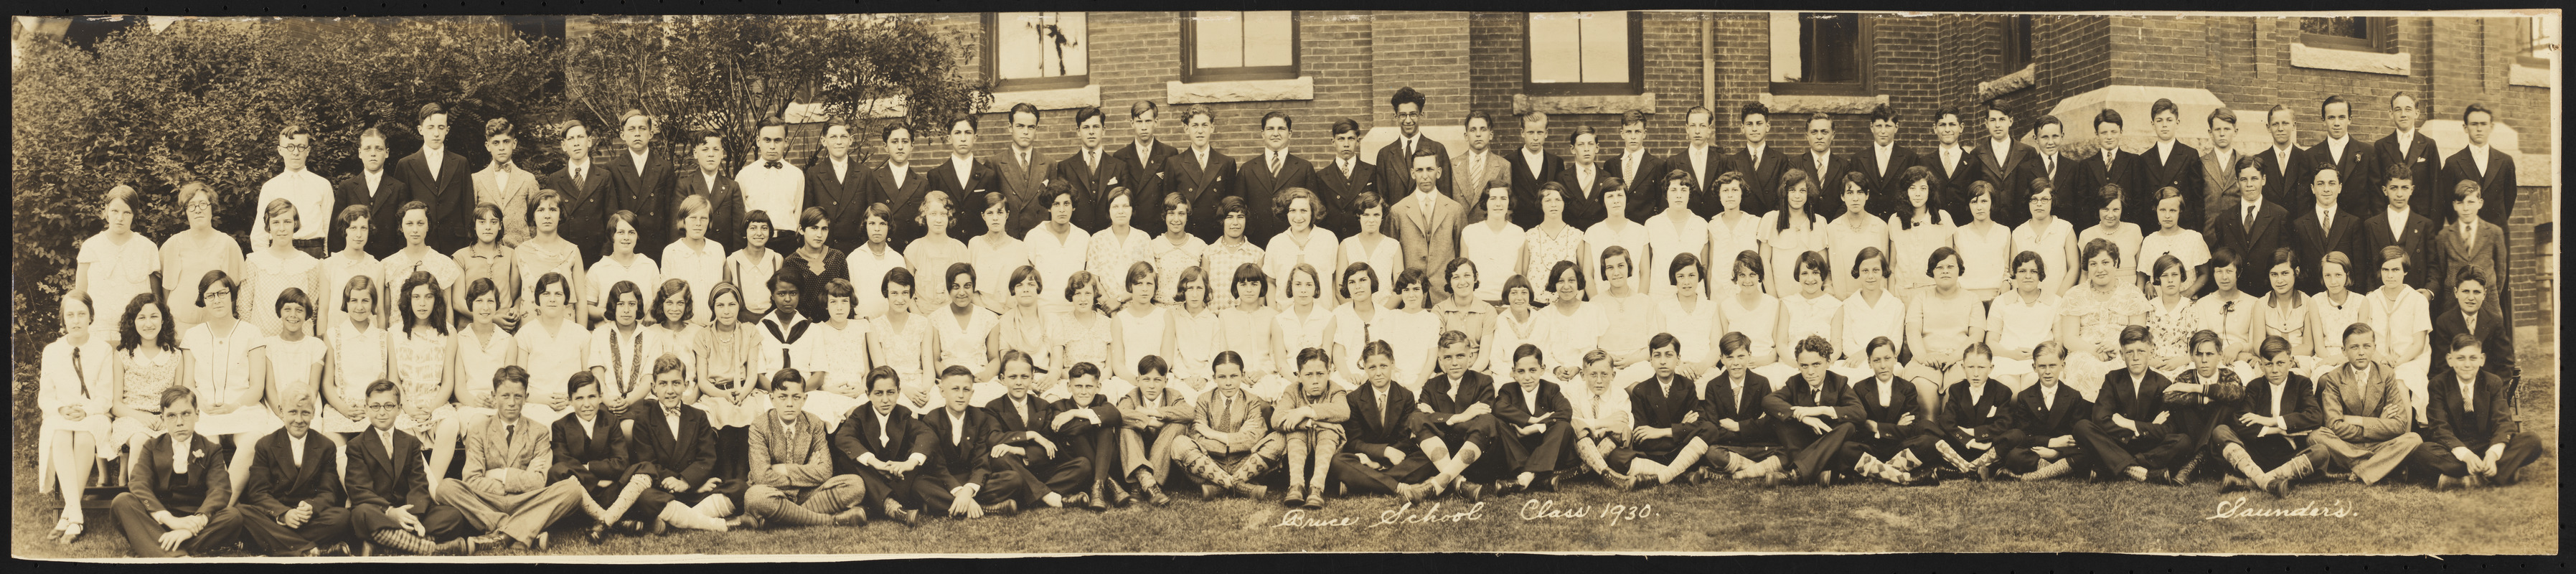 Bruce School class 1930